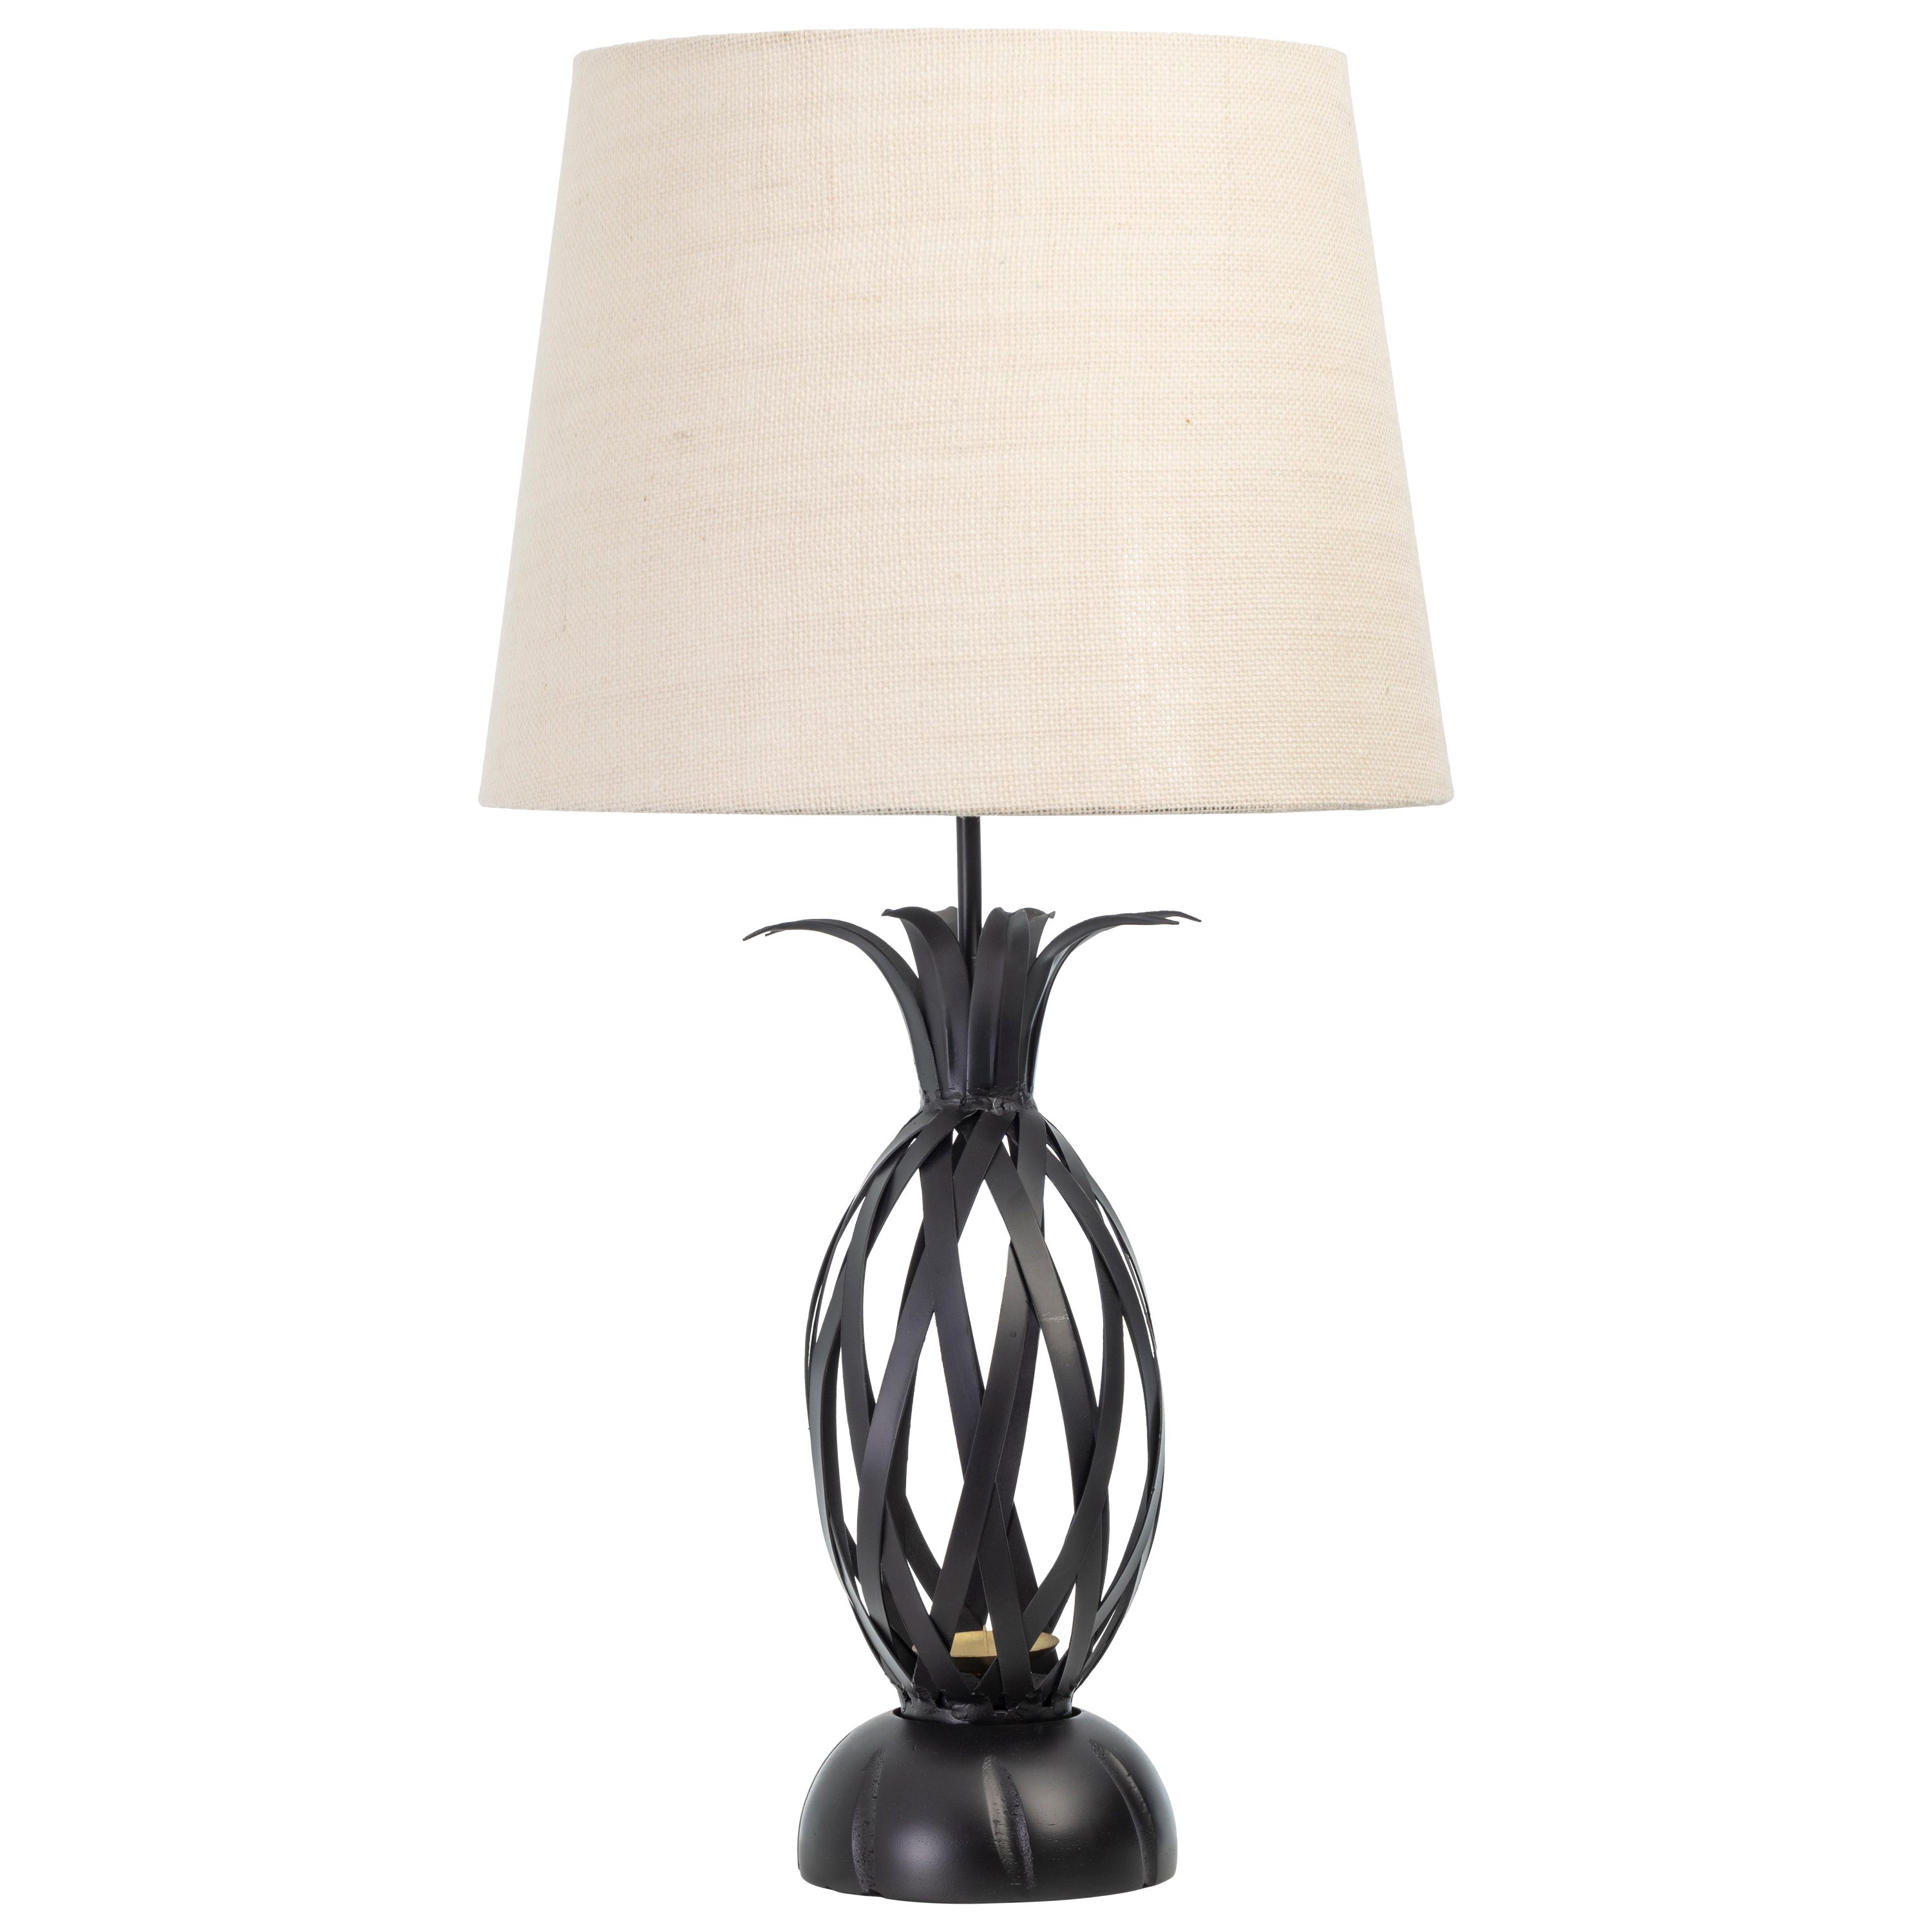 Pinapple table lamp